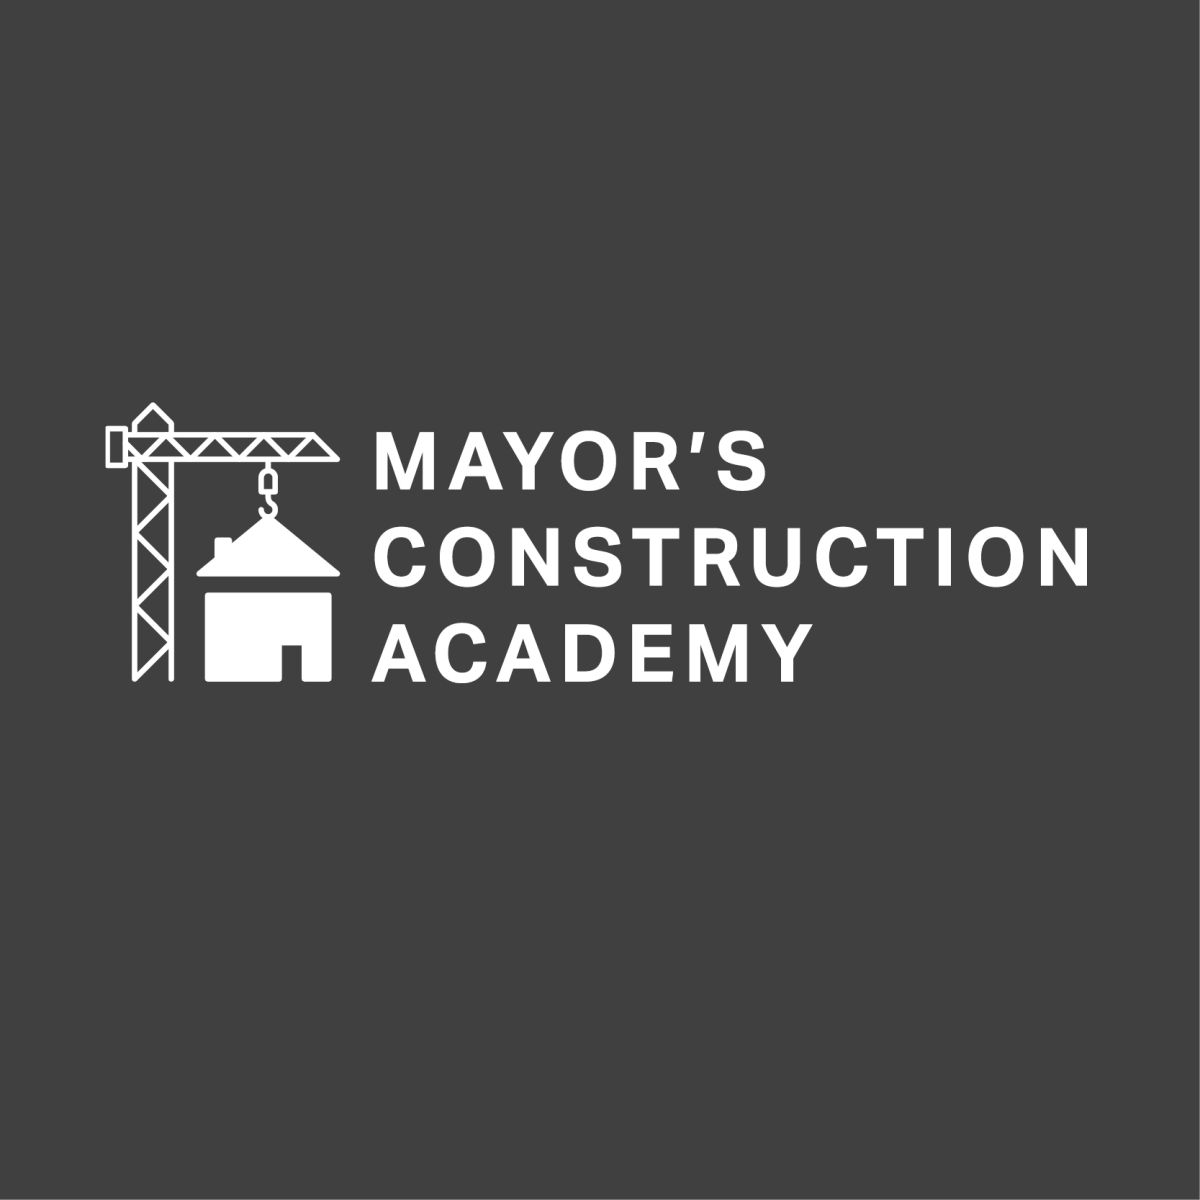 John Ruskin College is Awarded the Mayor's Construction Academy Quality Mark